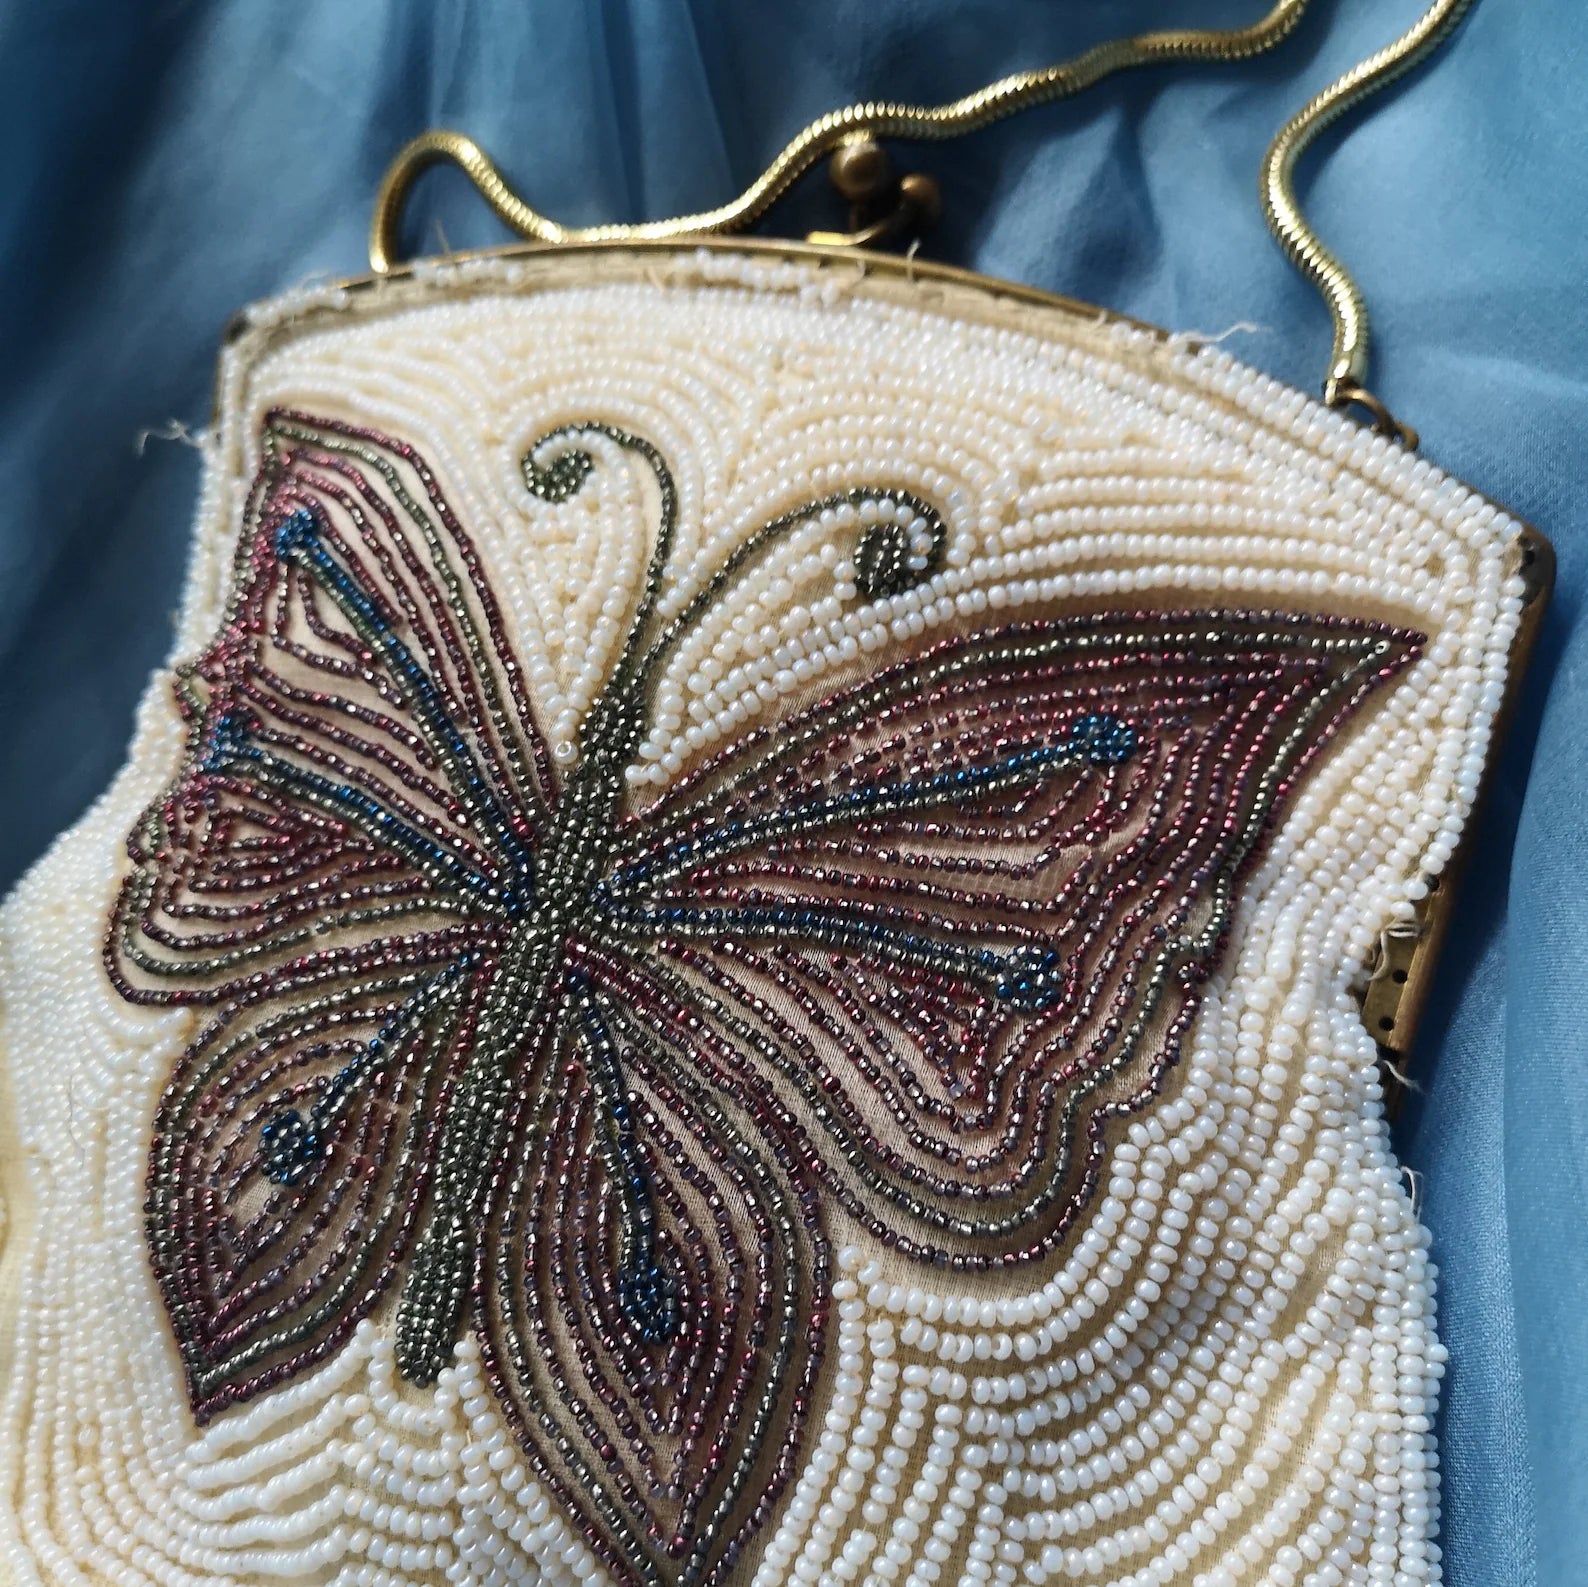 Antique Art Nouveau Beaded Clutch. Cream and Gold Evening Bag. Belgium